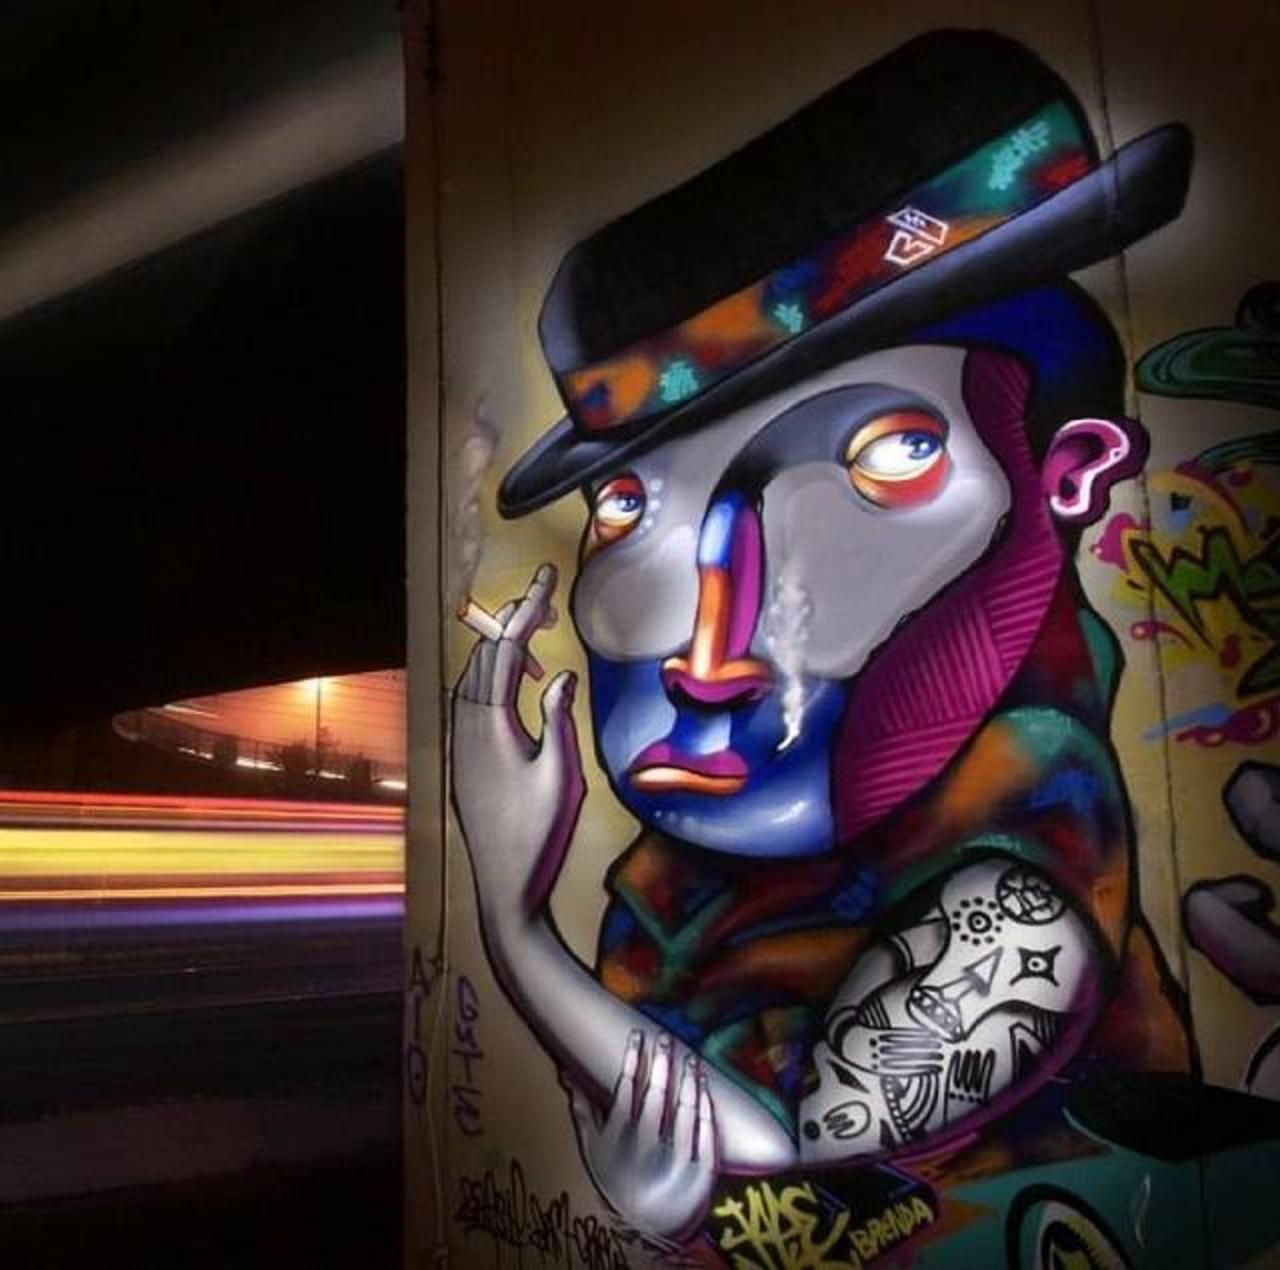 RT "@GoogleStreetArt: Abstract Street Art by Jade Rivera 

#art #mural #graffiti #streetart http://t.co/SKr20sv3US"